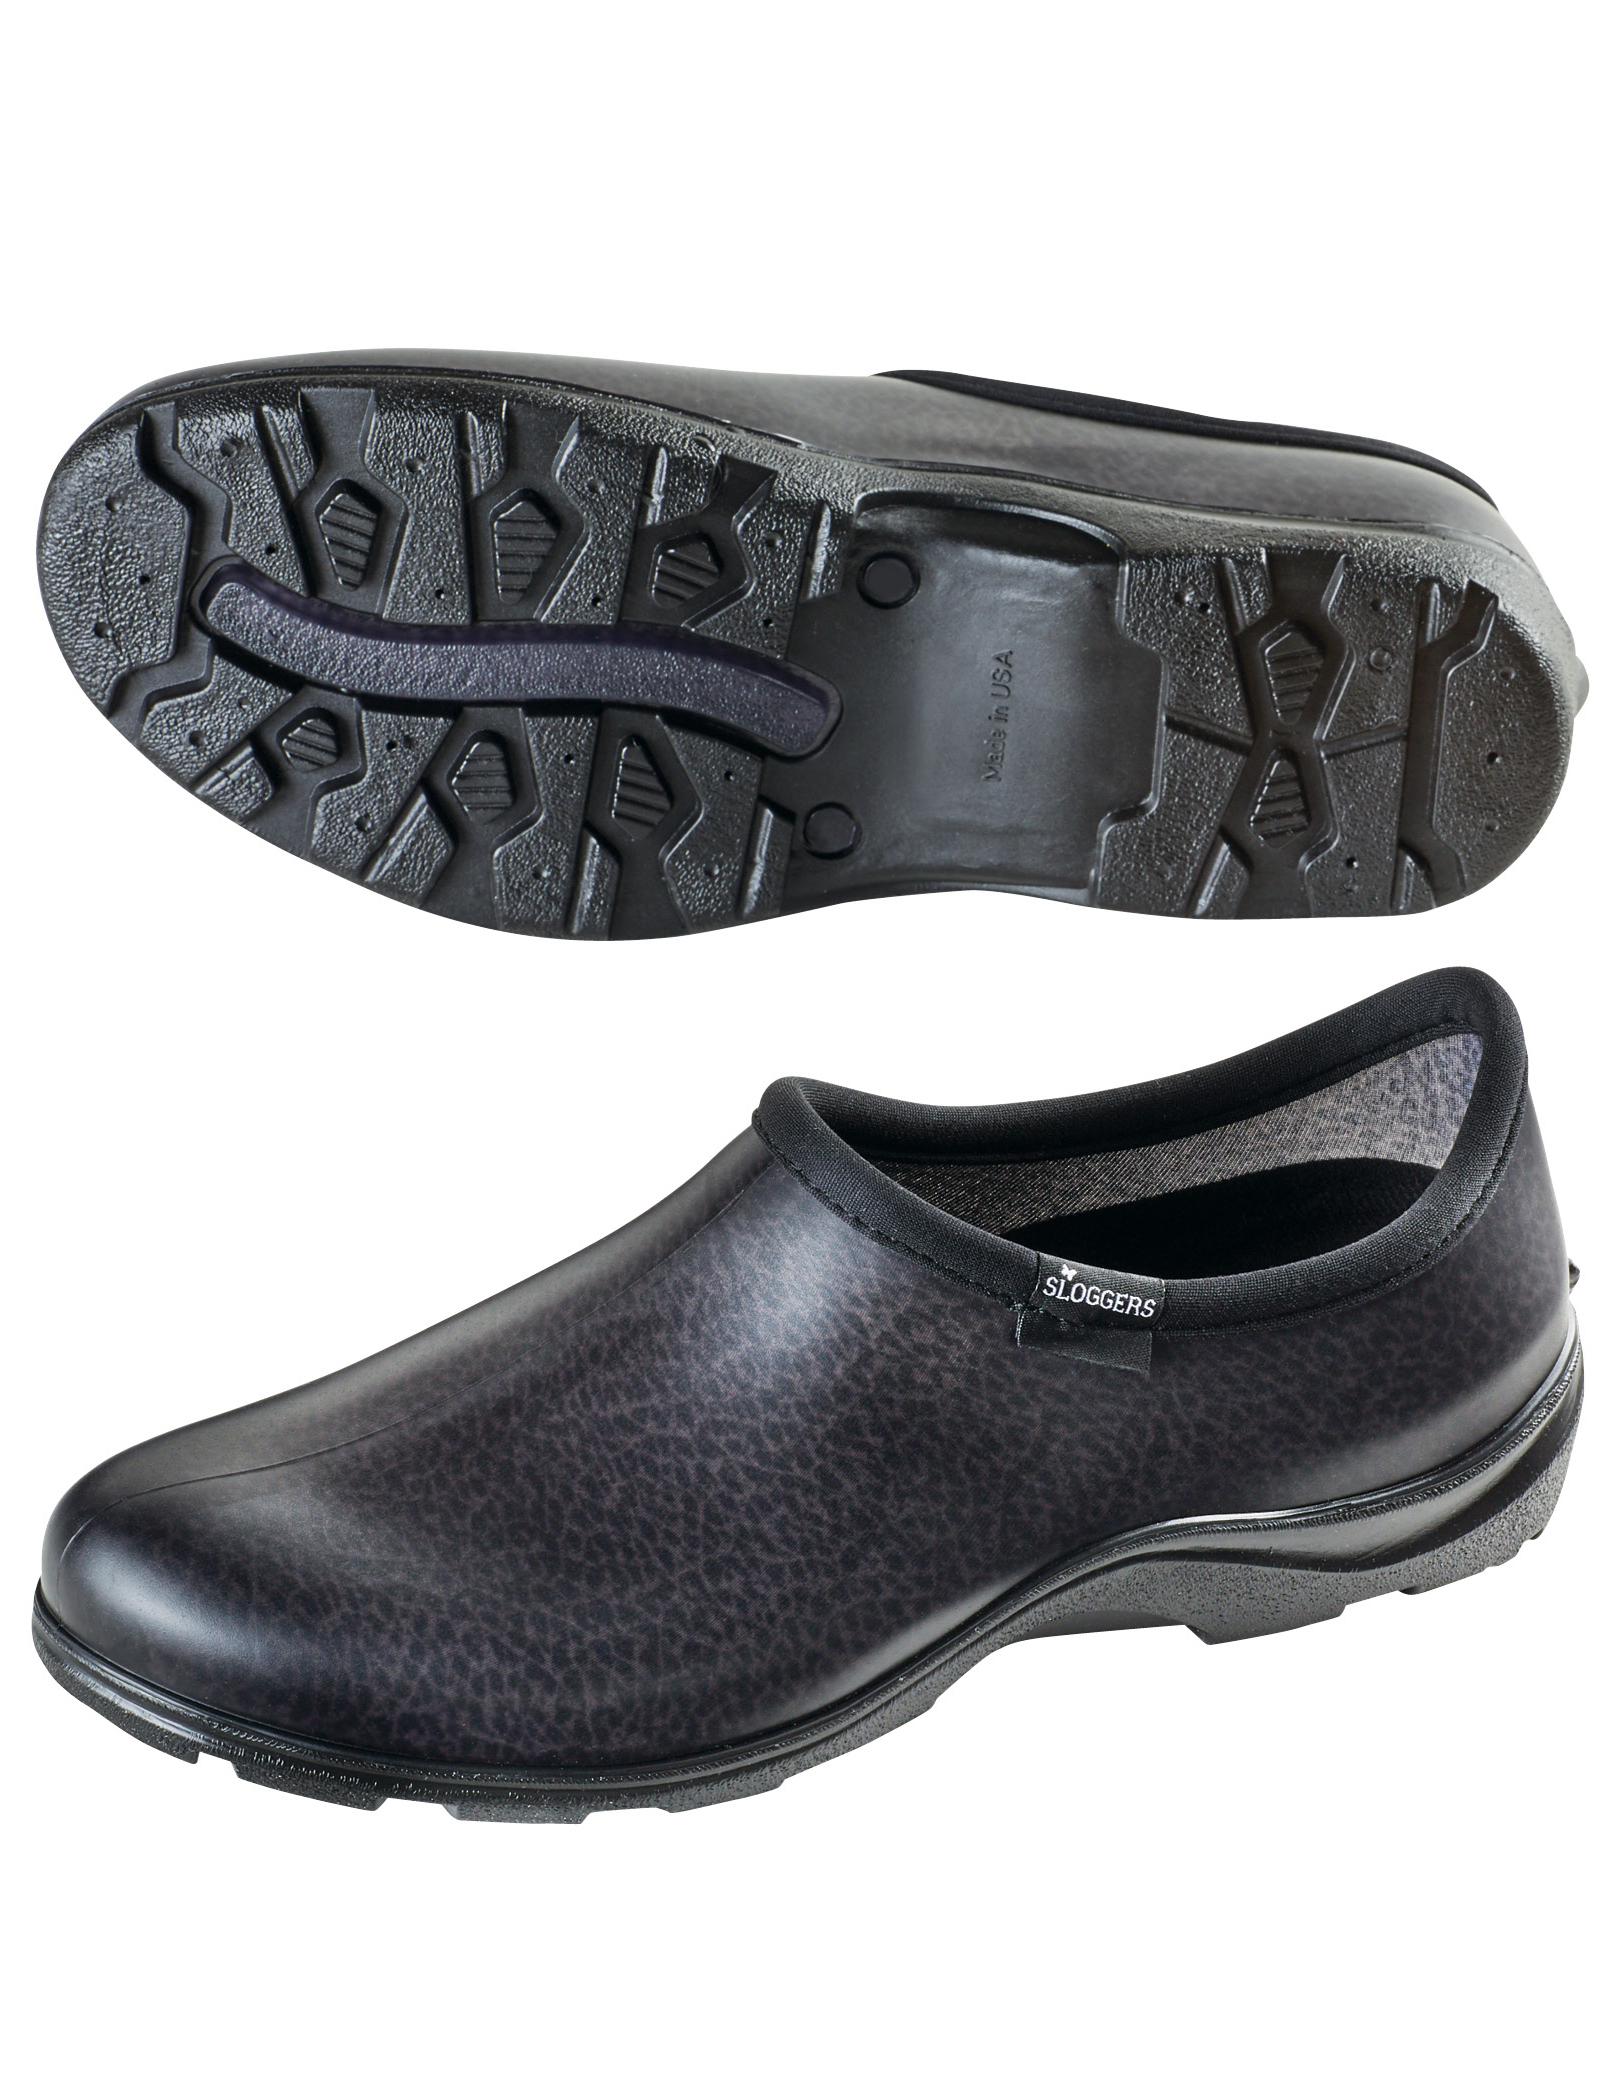 Sloggers 5301BK12 Men's Rain and Garden Shoe, Black, Size 12 - image 1 of 2